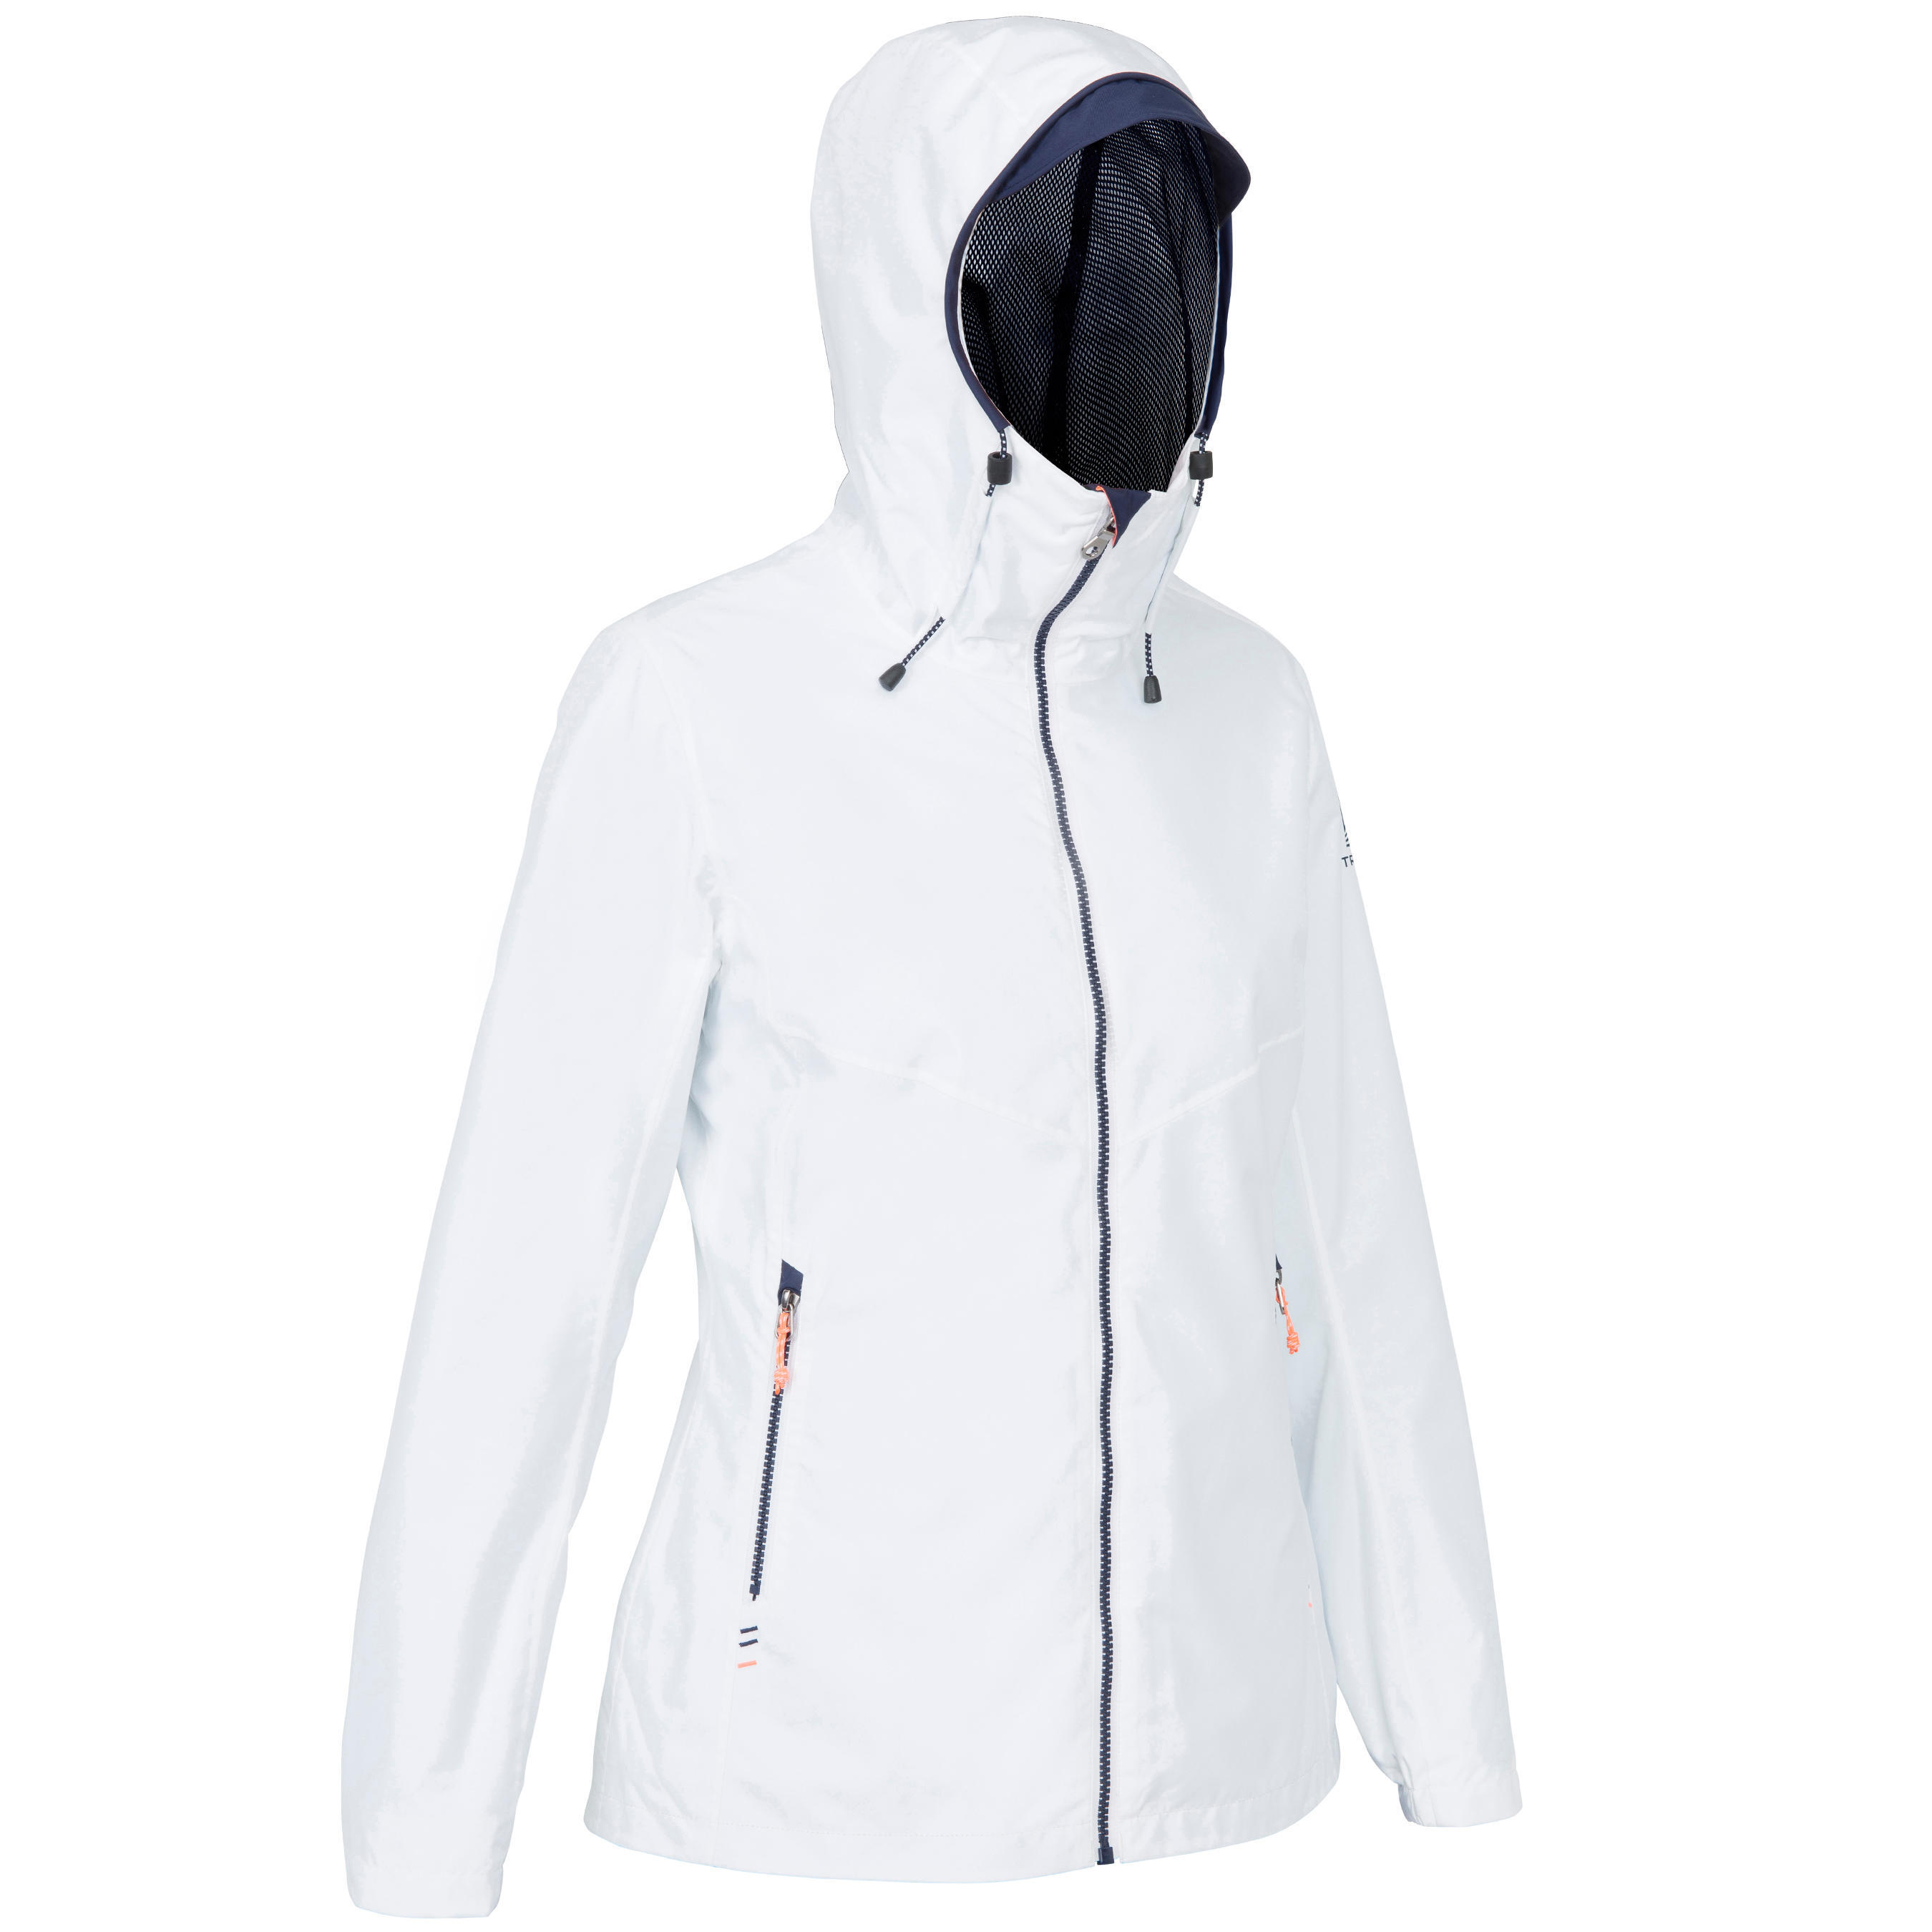 Refurbished Womens waterproof sailing jacket - wet-weather jacket - A Grade 1/7